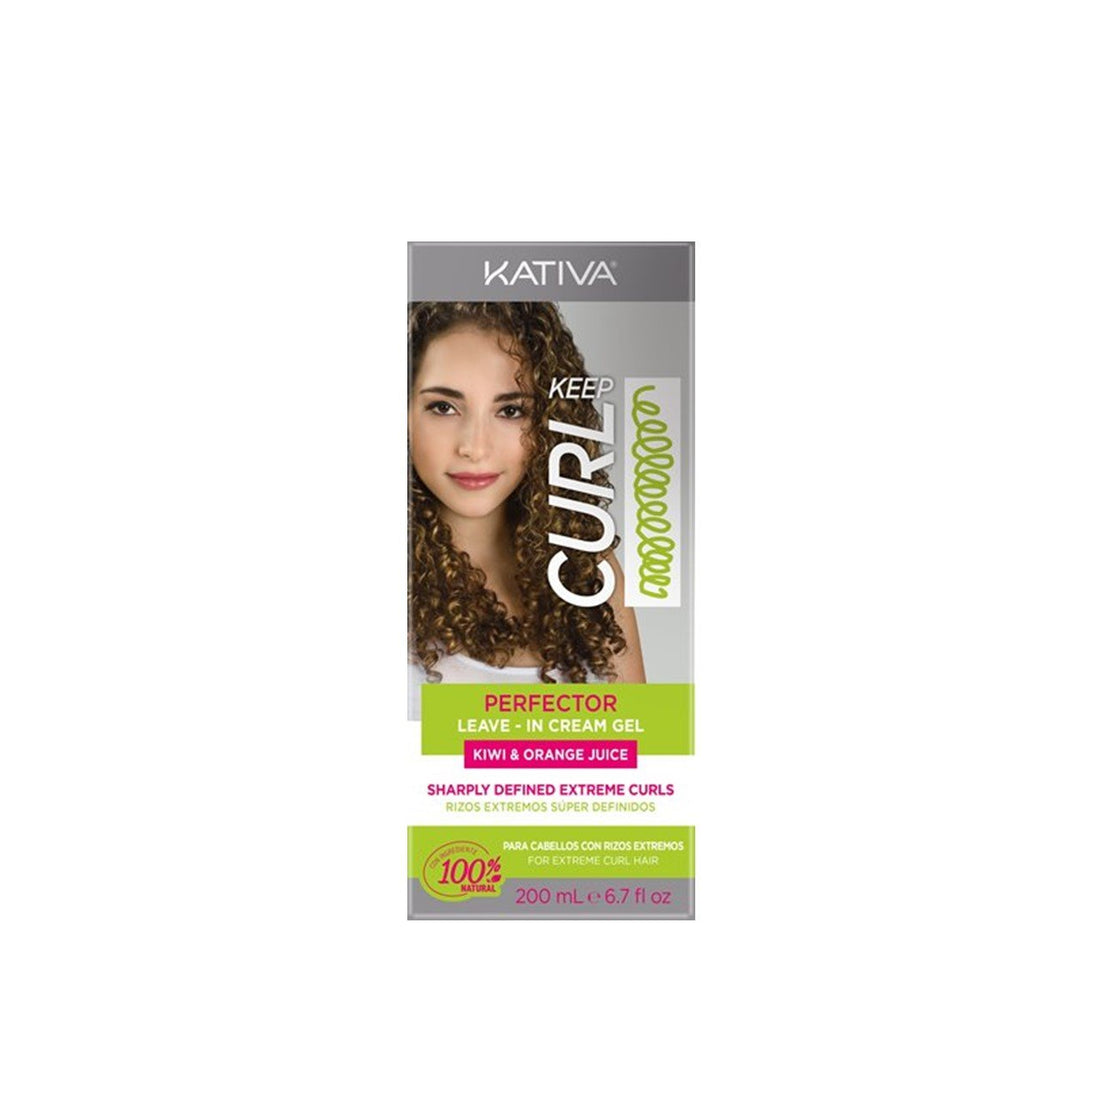 Kativa Keep Curl Perfector Leave-In Gel Creme 250ml